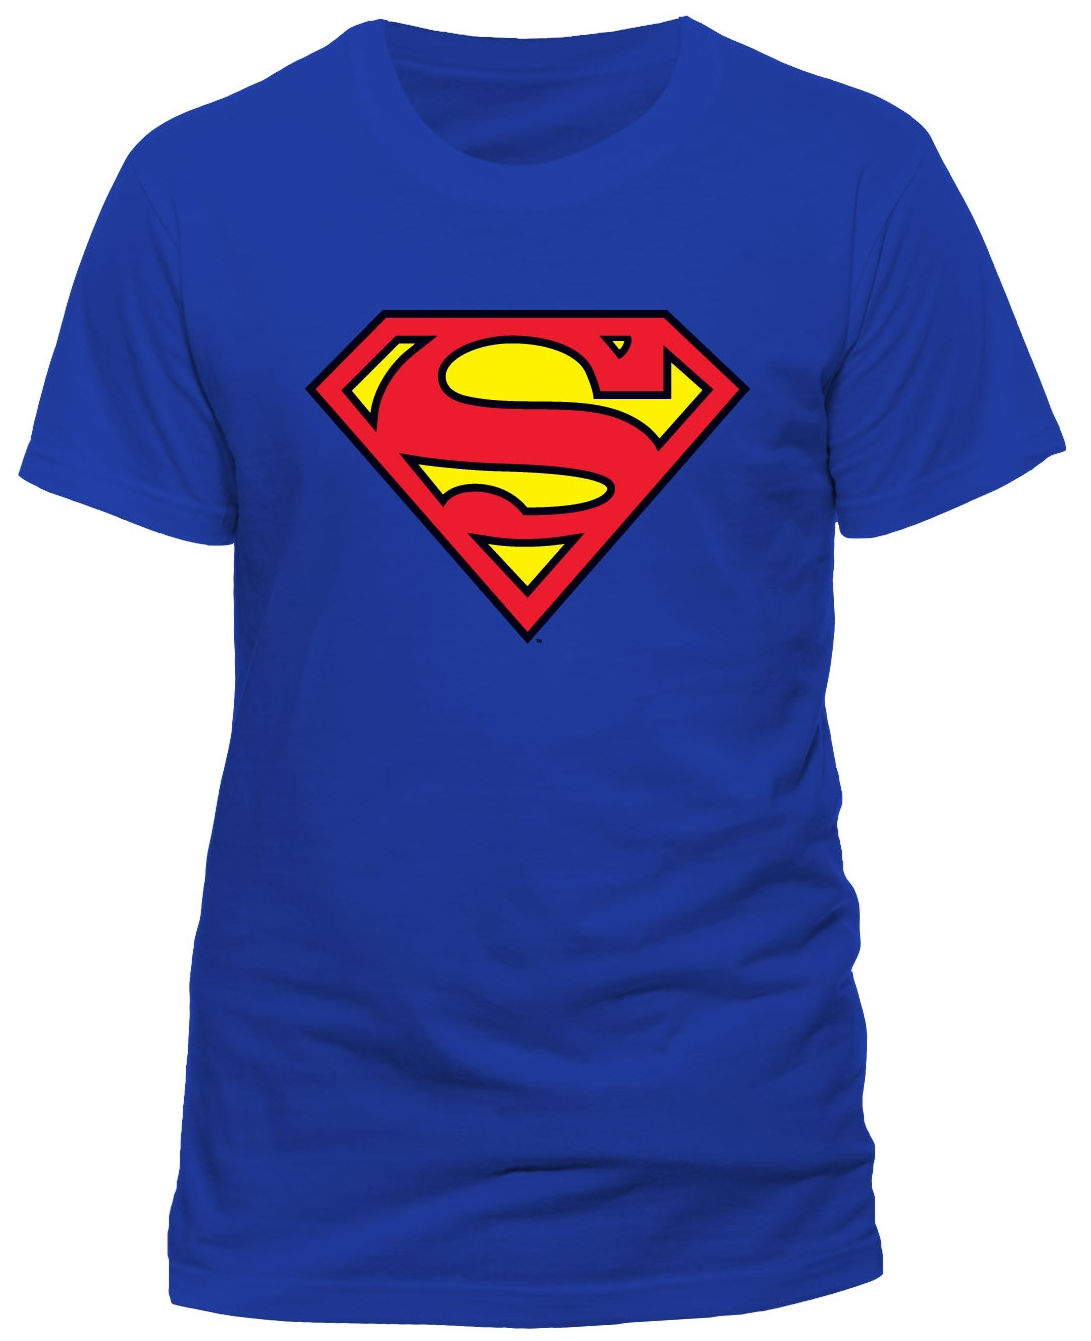 Superman Logo Blue T-Shirt - OFFICIAL | eBay